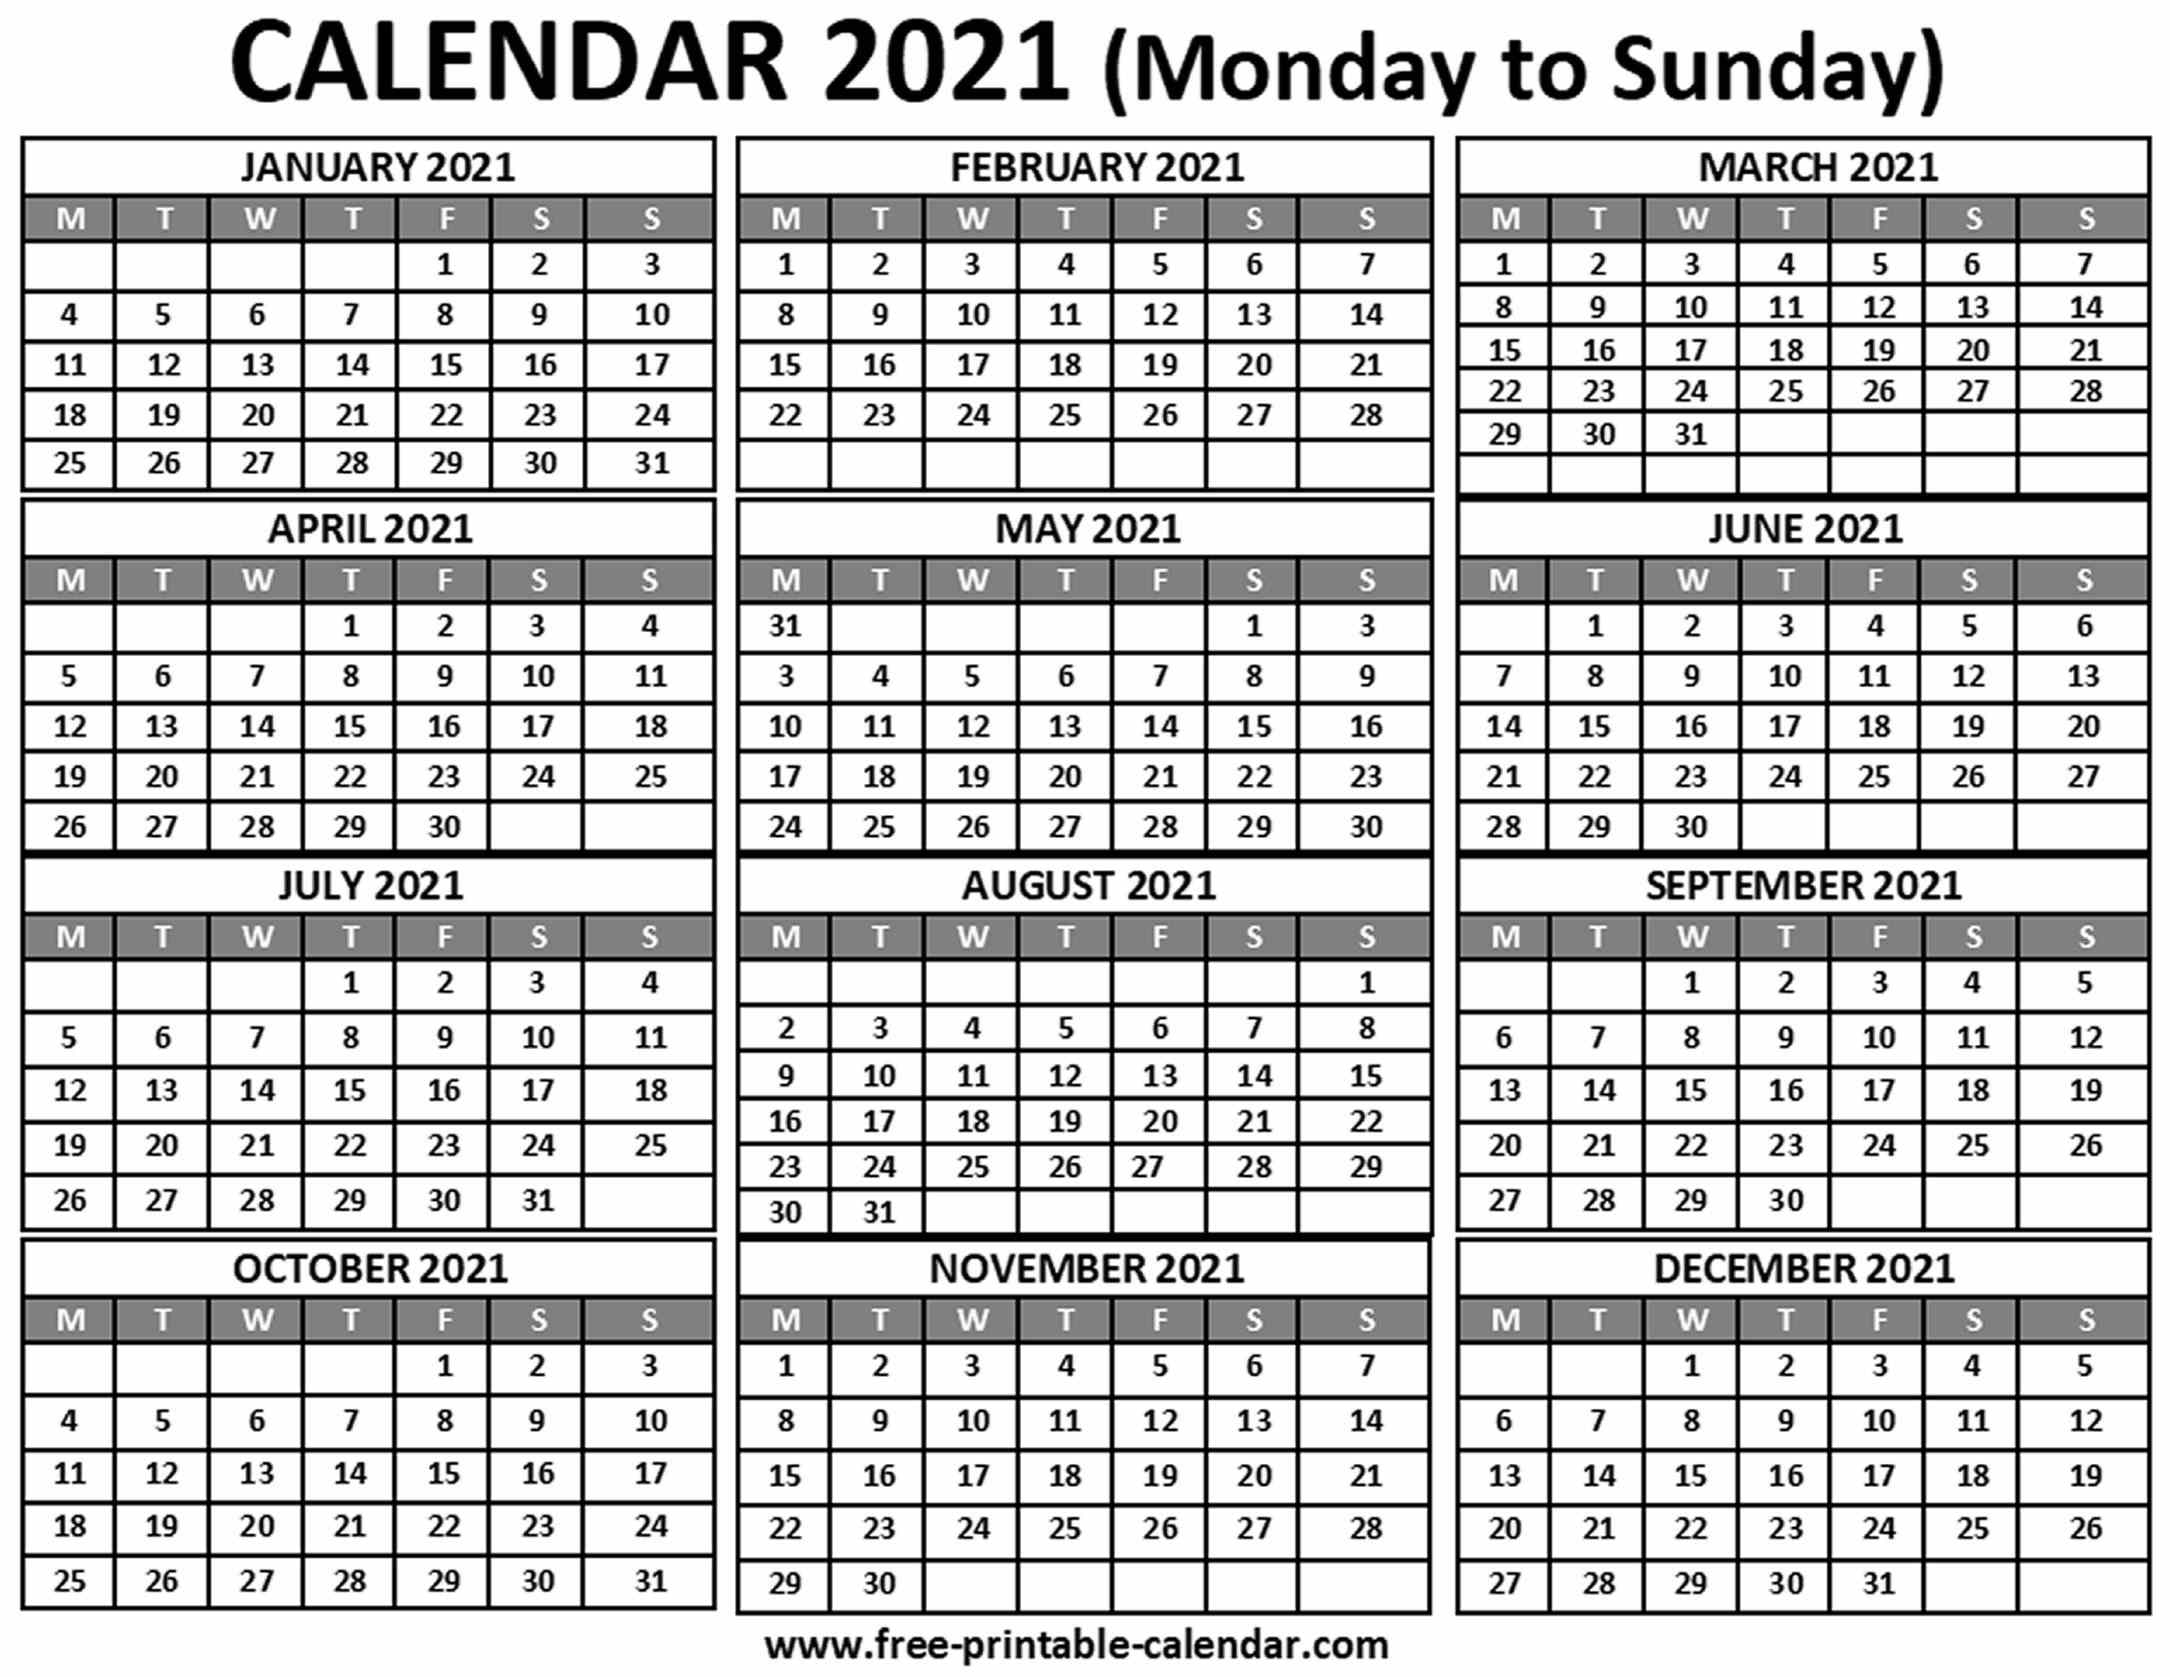 2021 Calendar - Free-Printable-Calendar